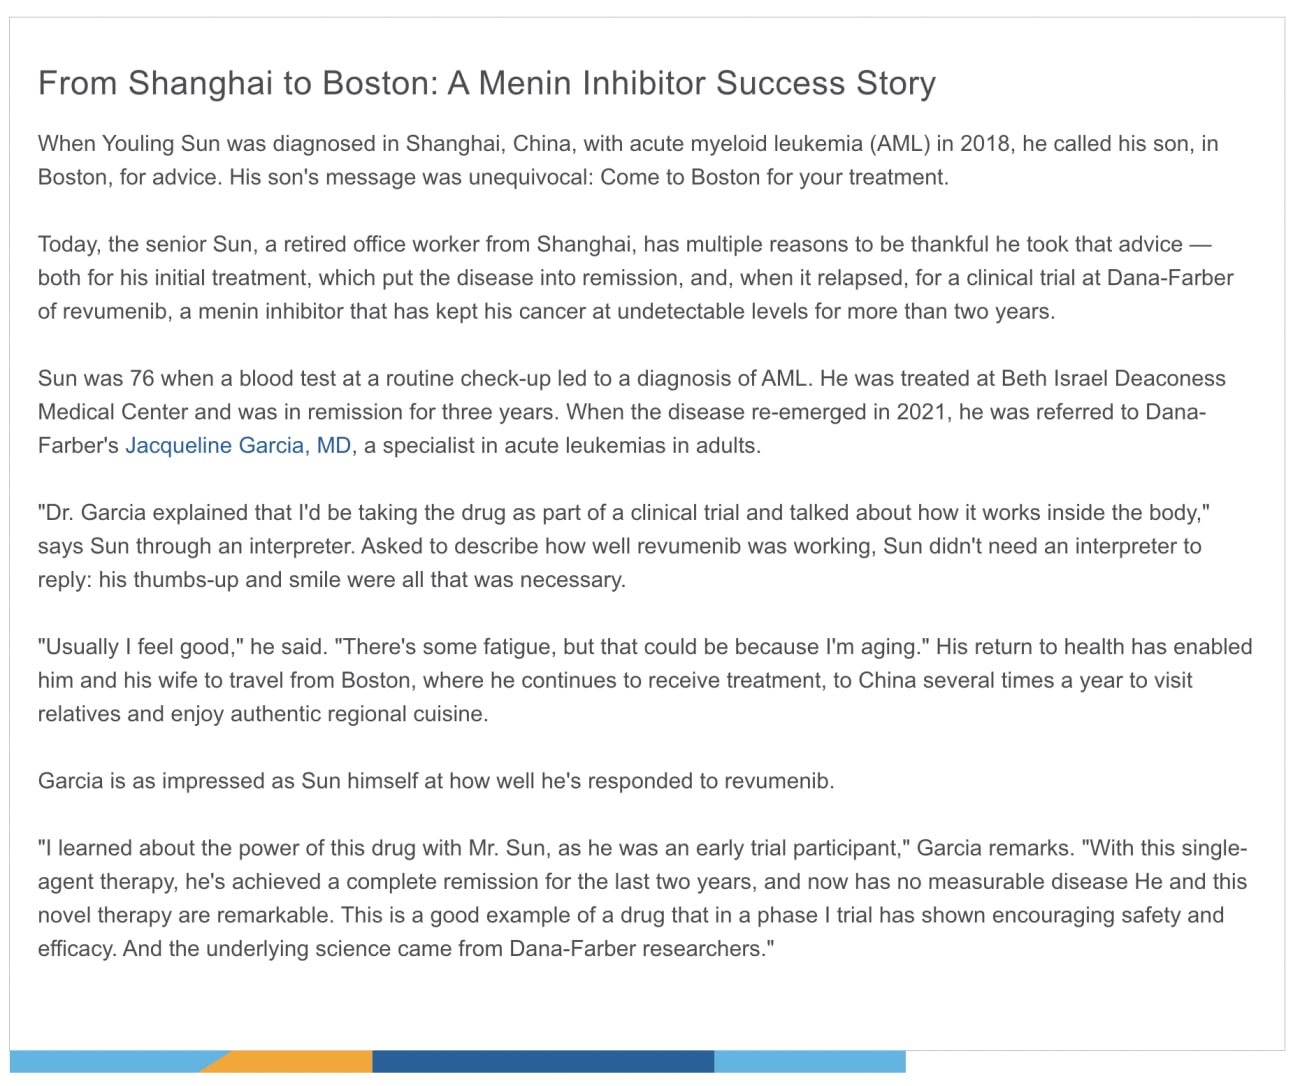 From Shanghai to Boston: A Menin Inhibitor Success Story